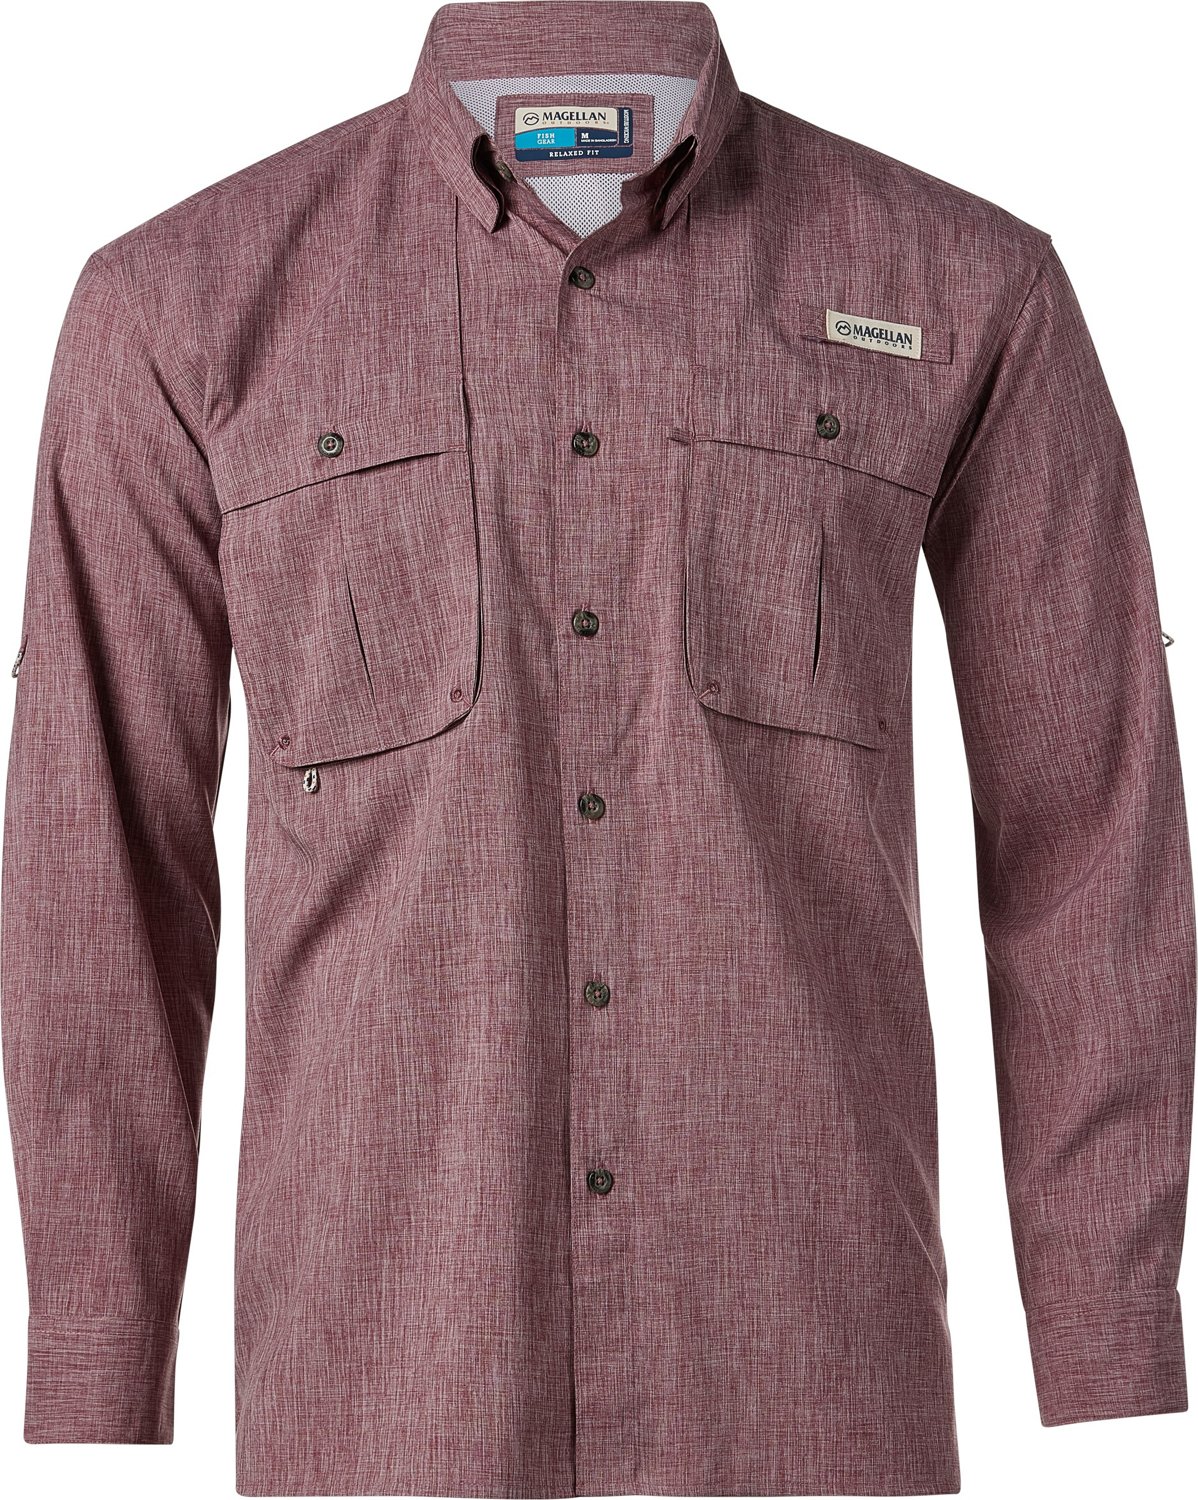 Men's Button Up Shirts | Price Match Guaranteed